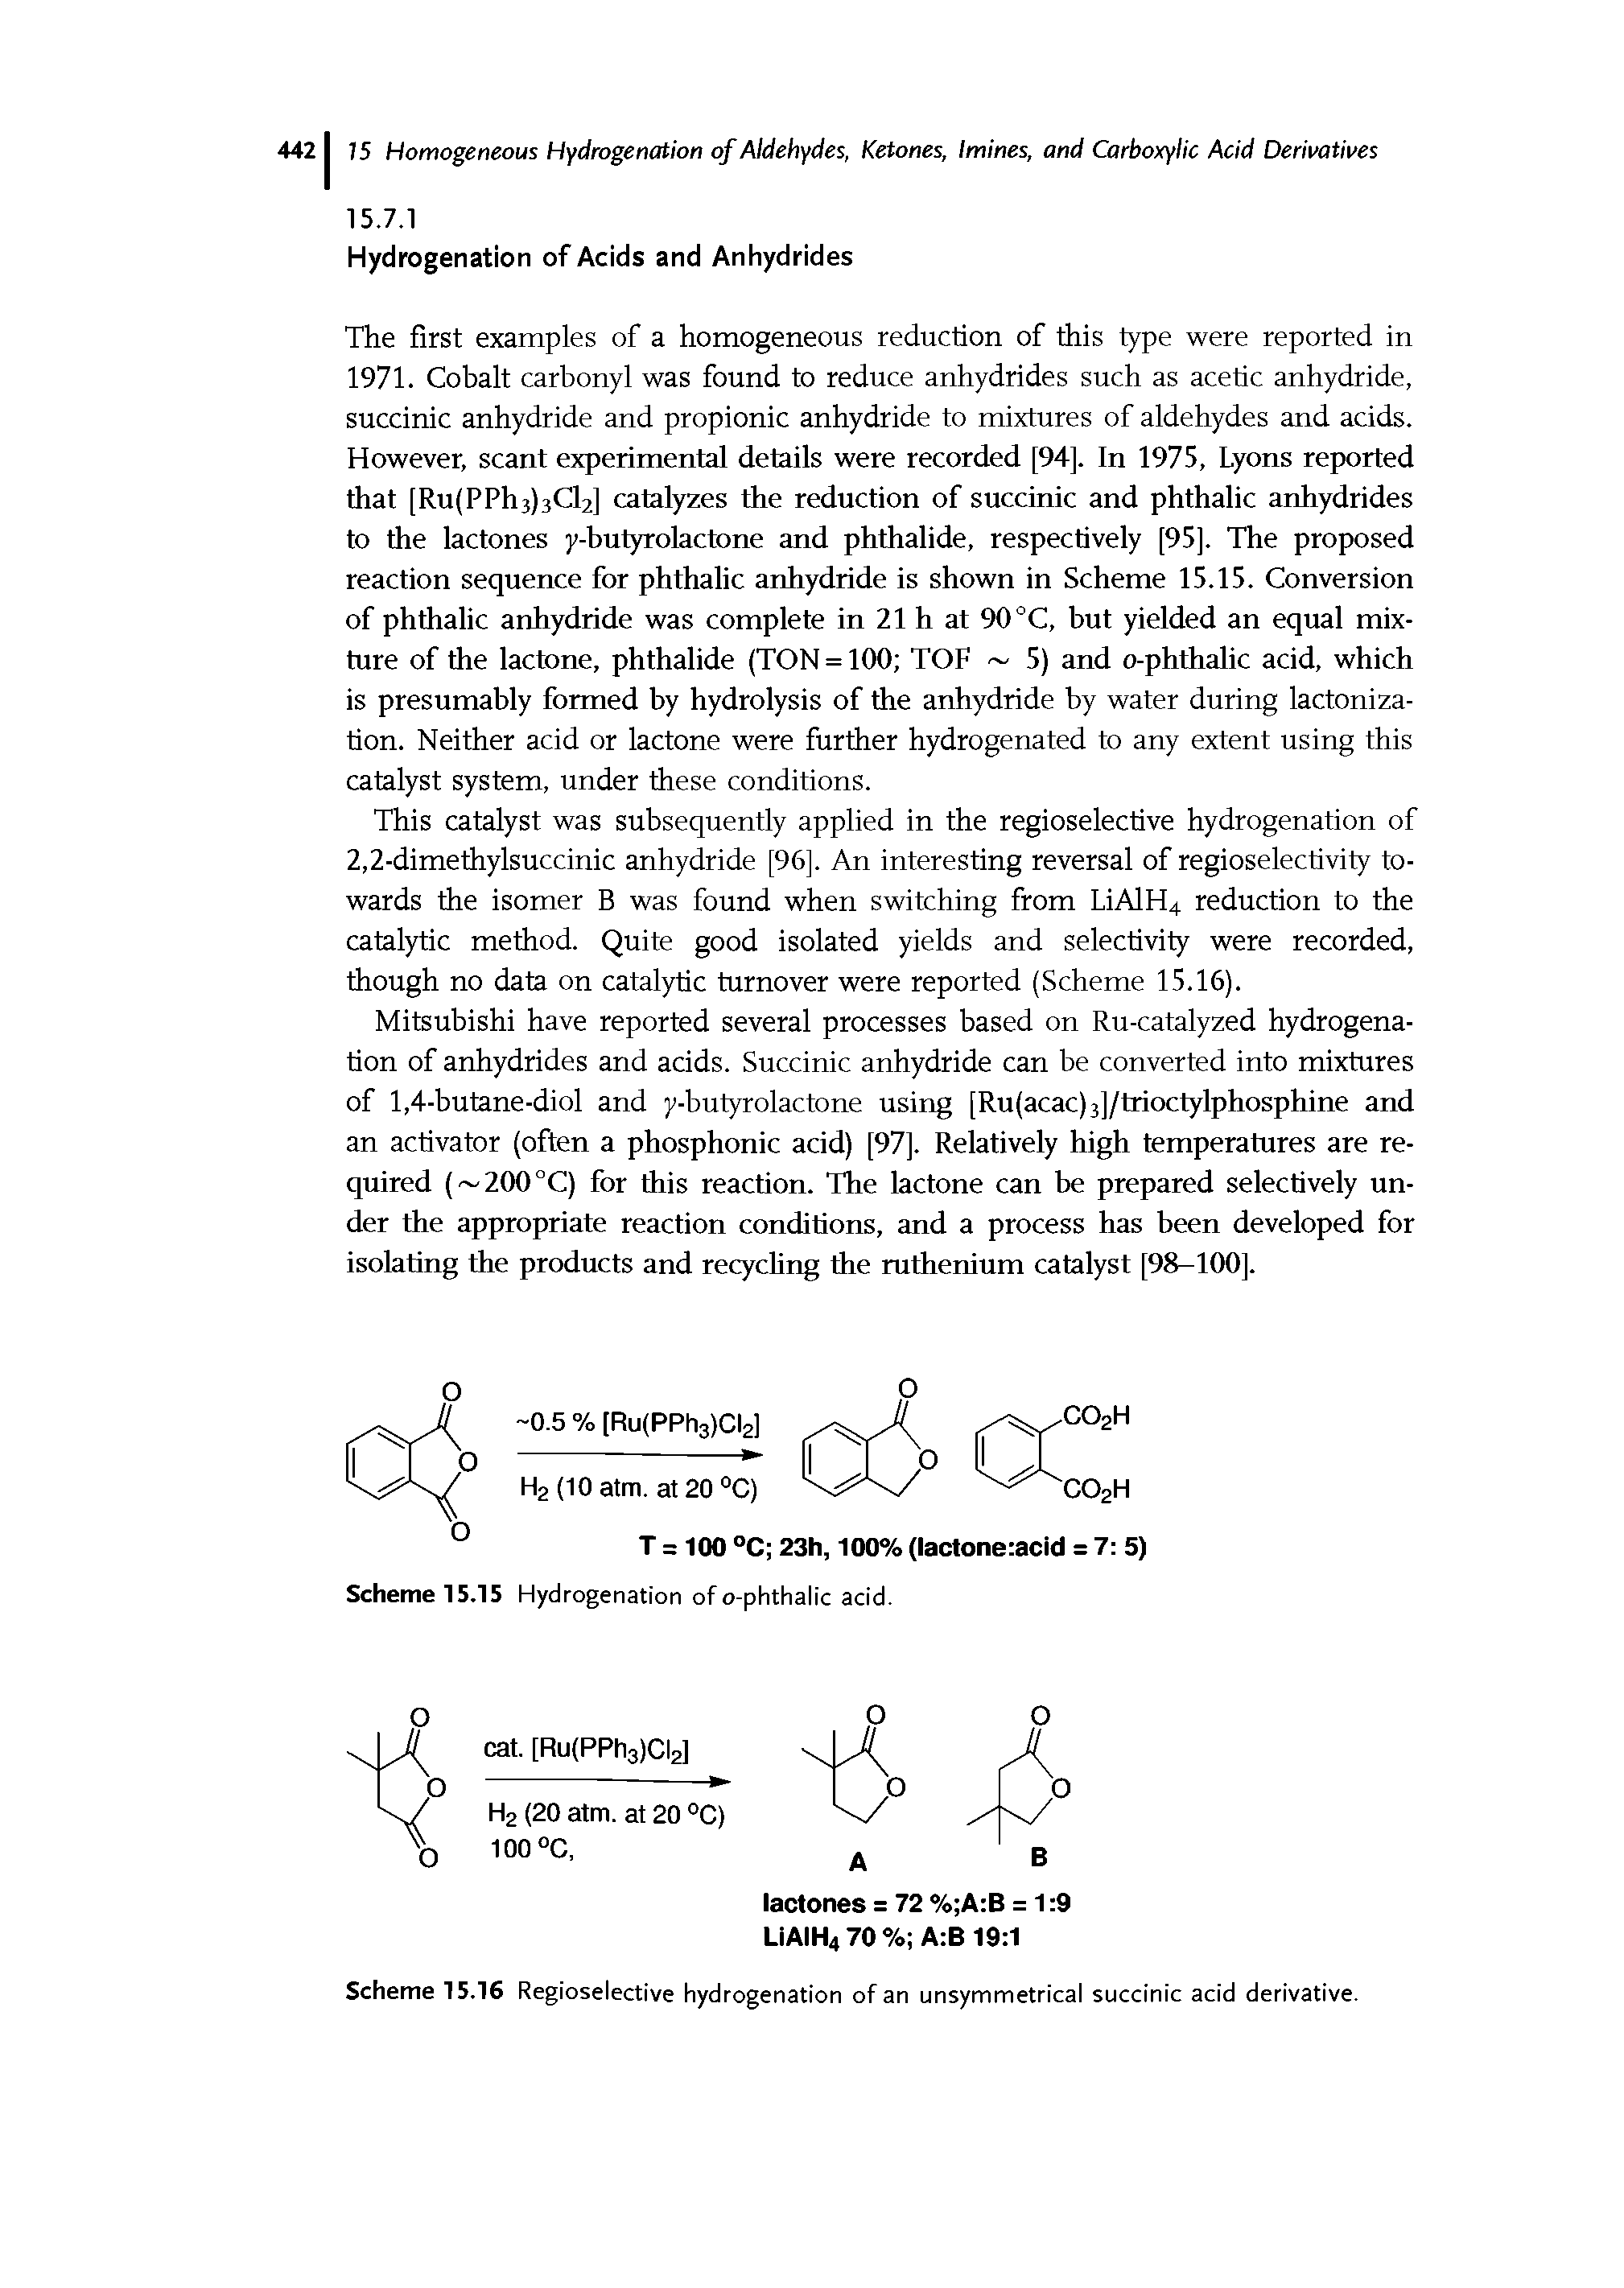 Scheme 15.16 Regioselective hydrogenation of an unsymmetrical succinic acid derivative.